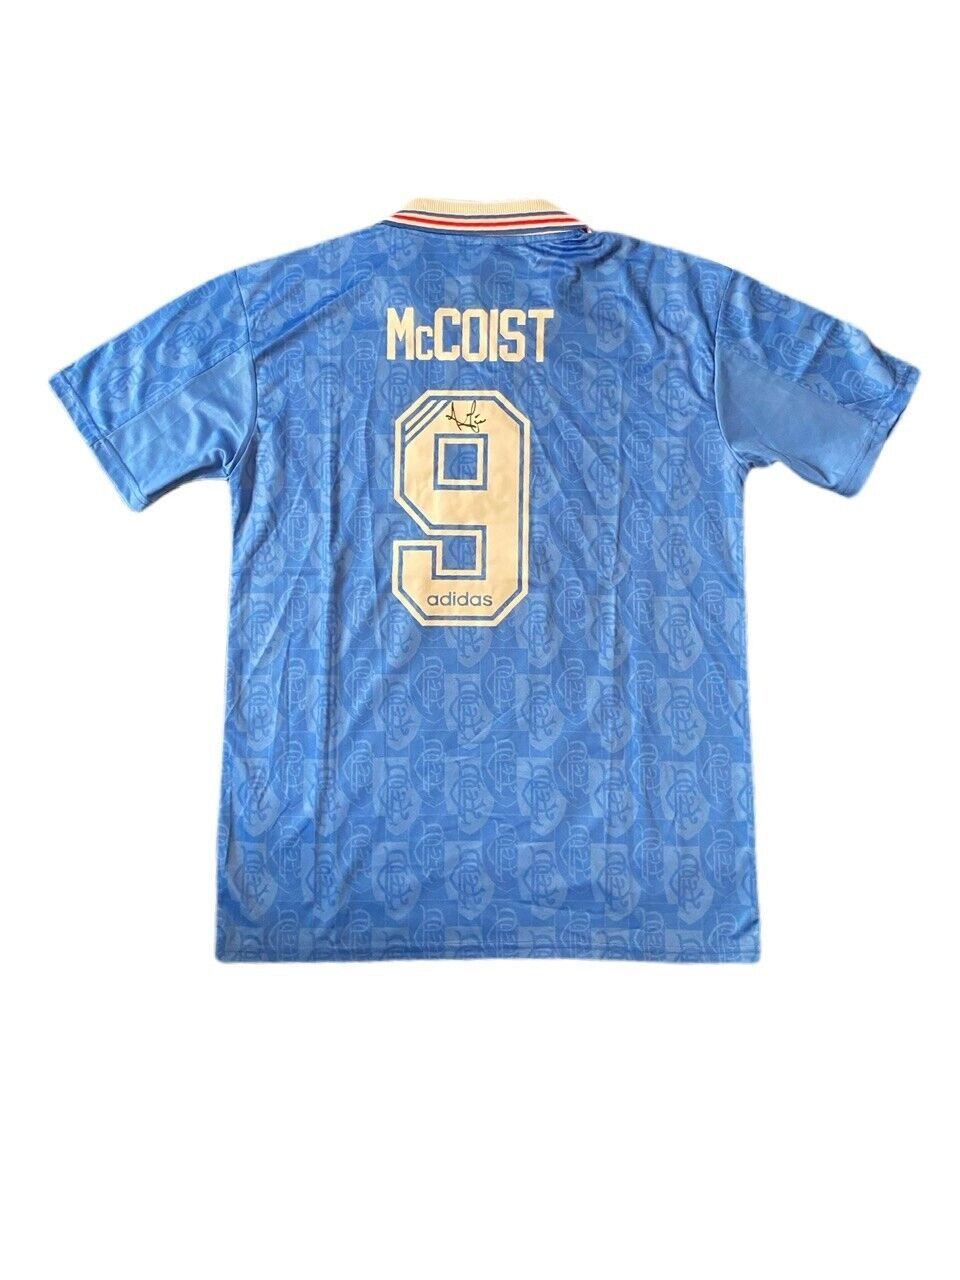 Ally Mccoist Signed Rangers Football Shirt 1996/1997 Number 9